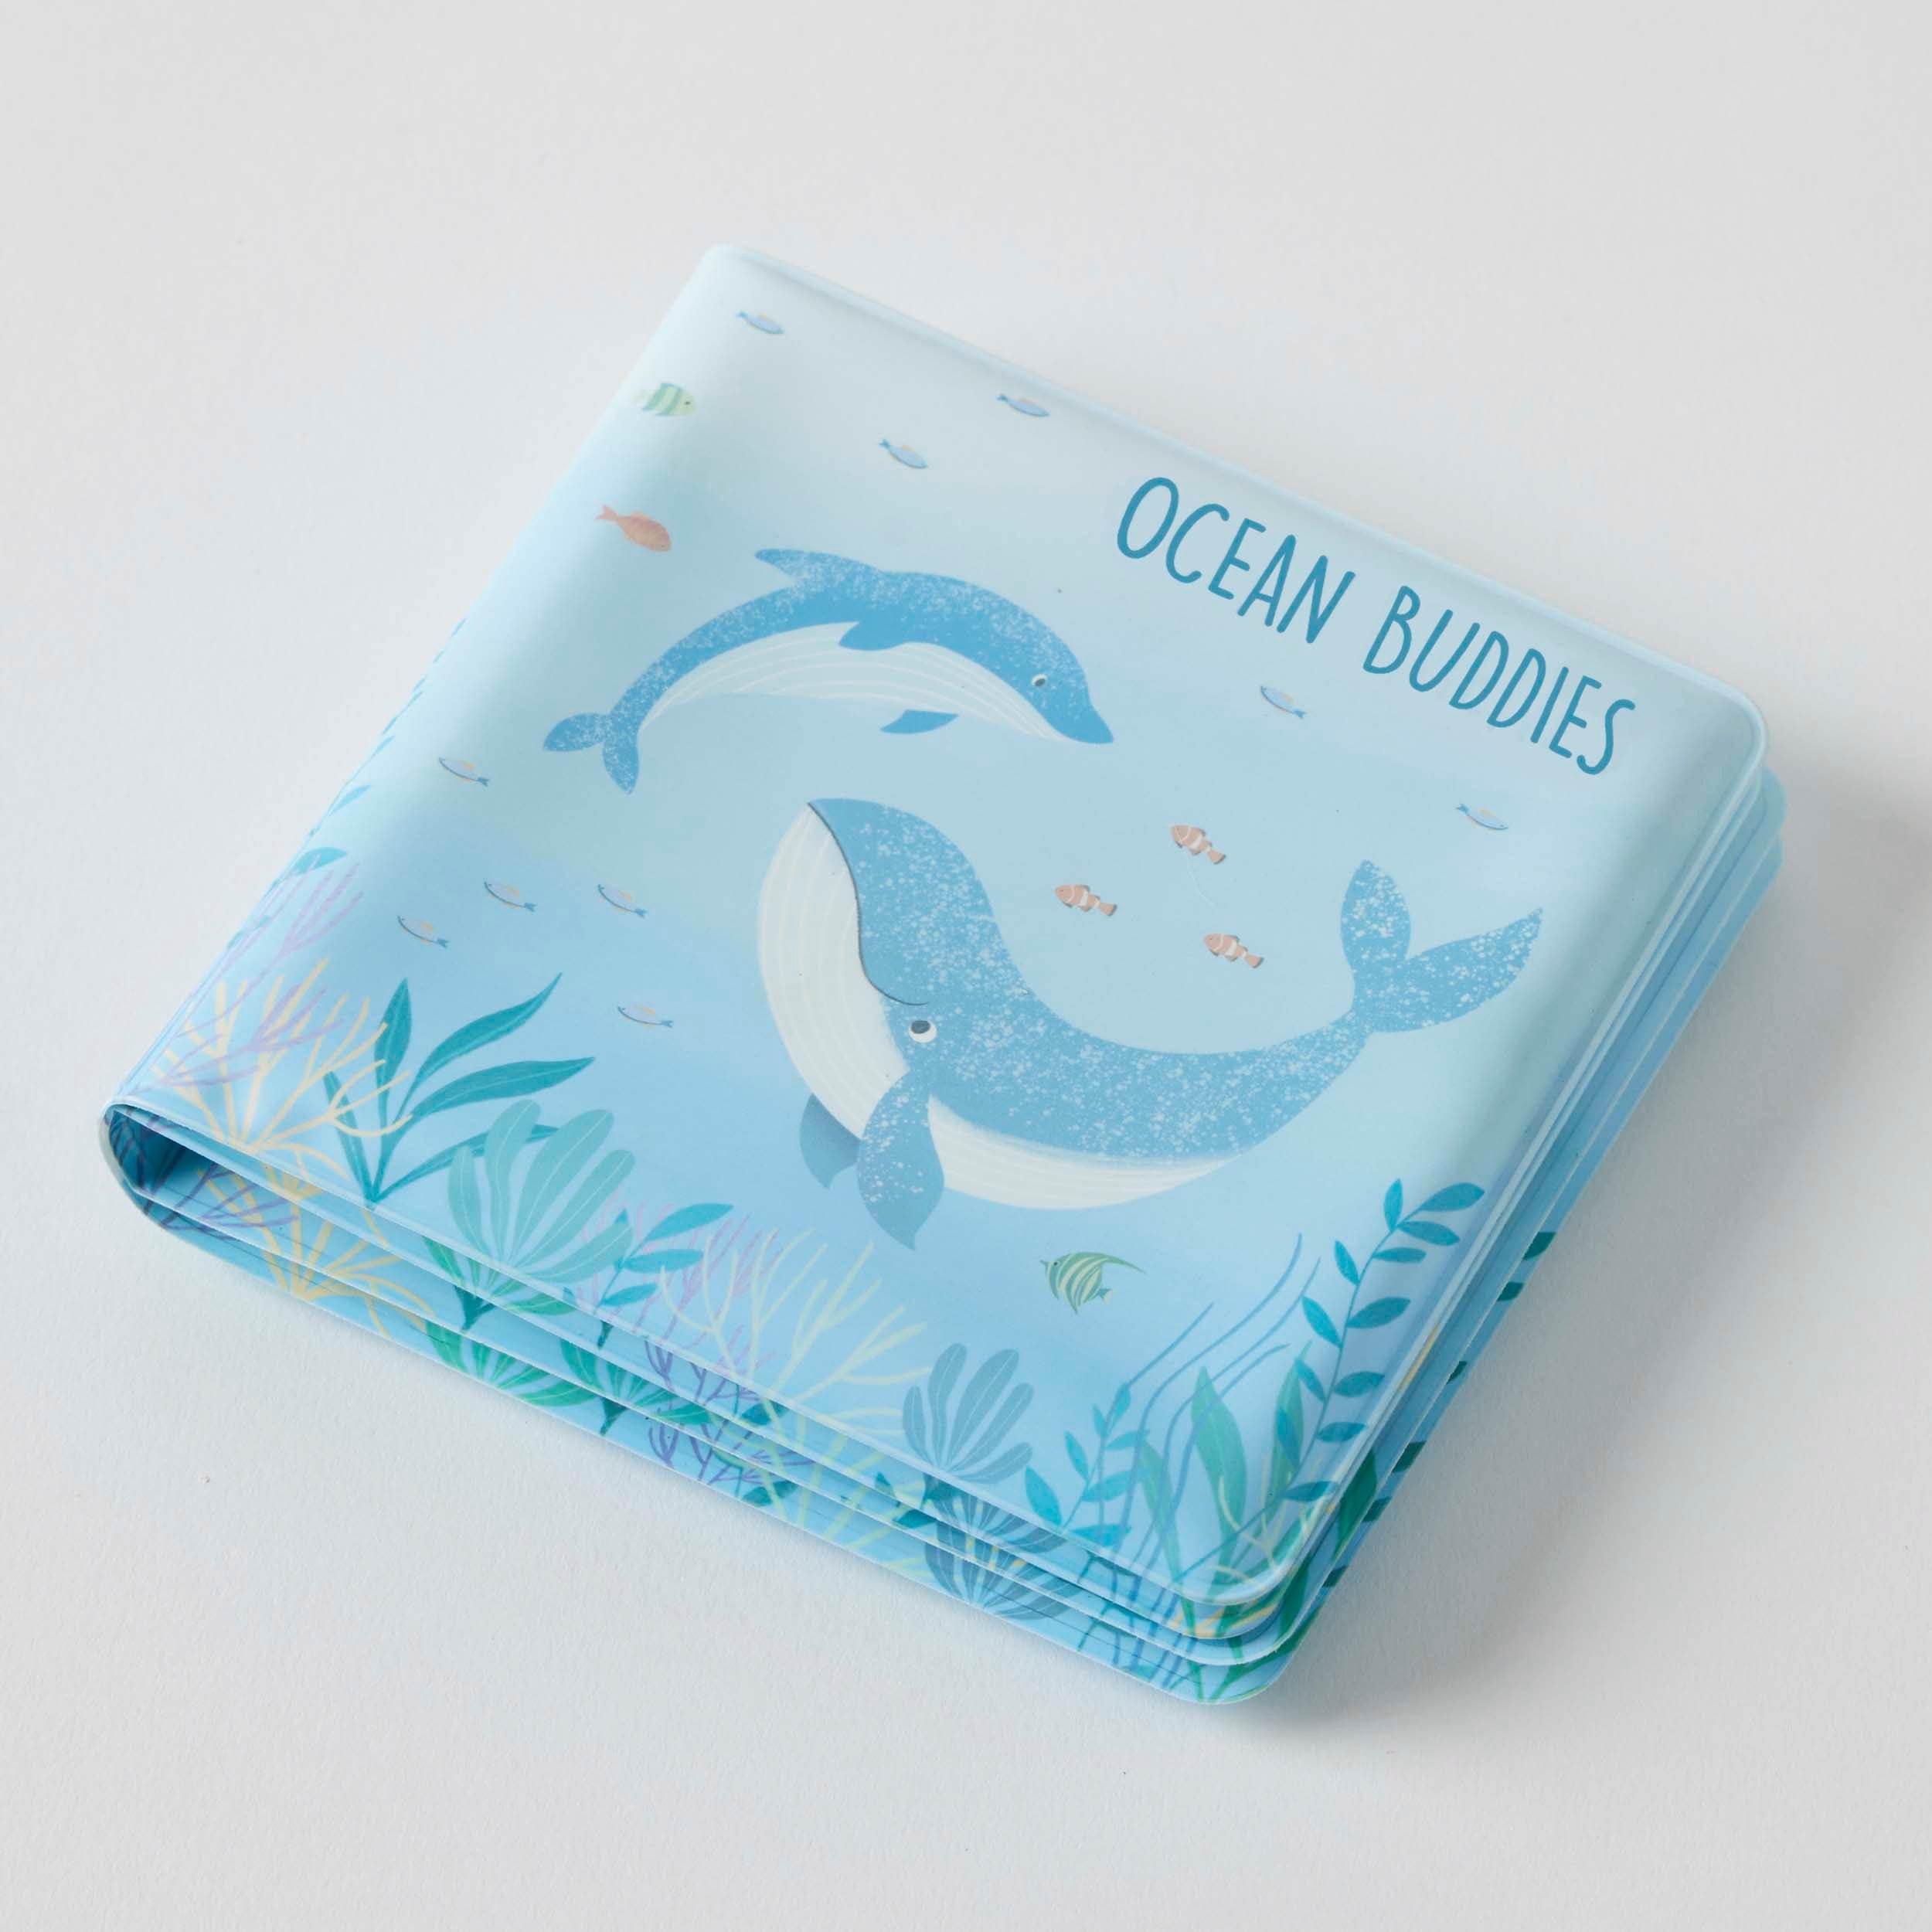 Pilbeam Baby Accessory Ocean Buddies Bath Book